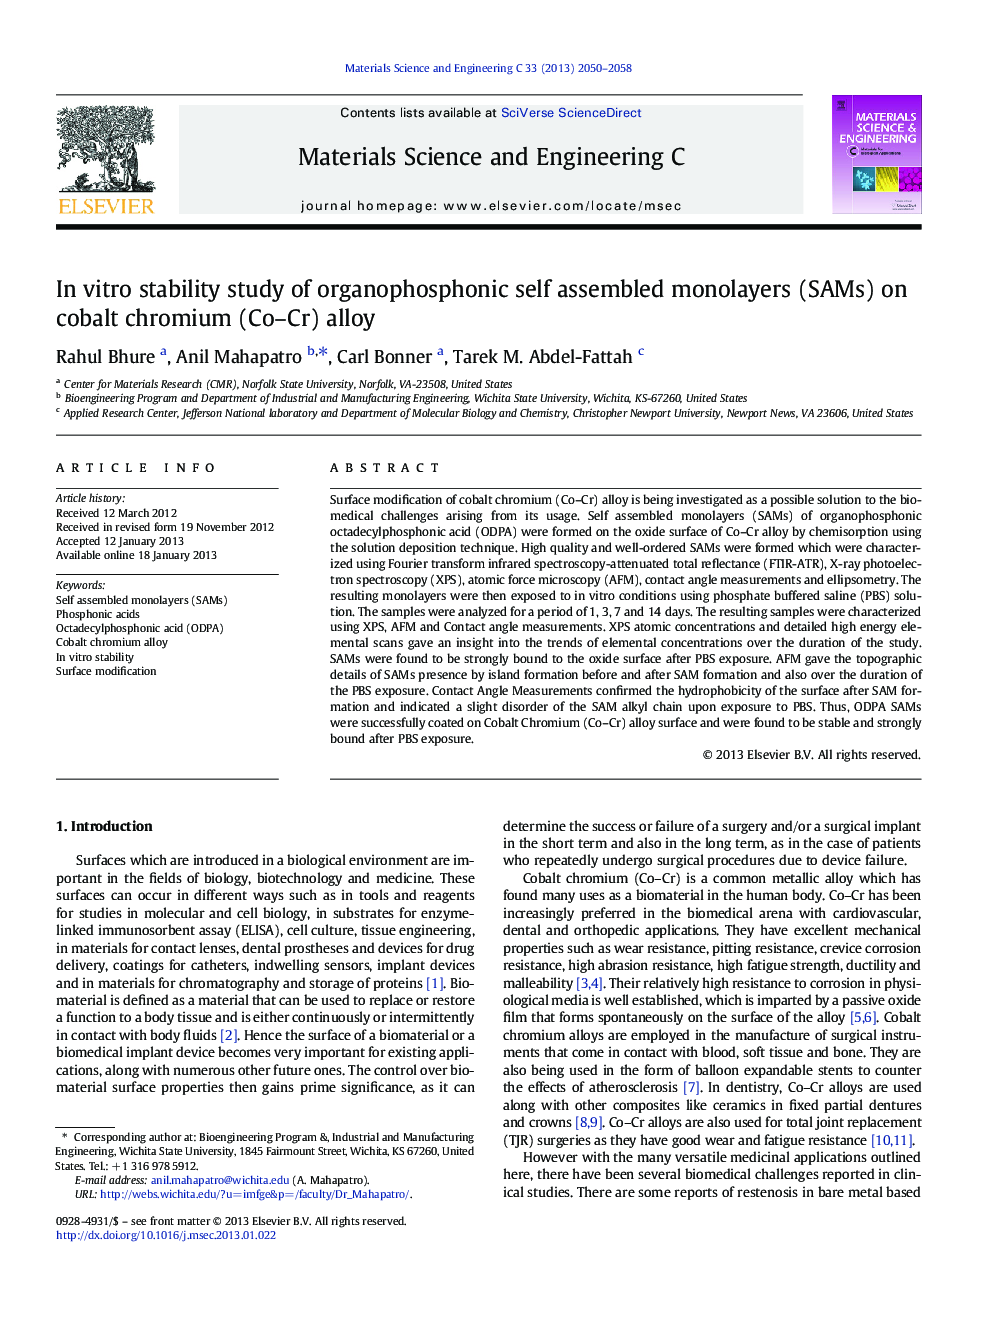 In vitro stability study of organophosphonic self assembled monolayers (SAMs) on cobalt chromium (Co–Cr) alloy